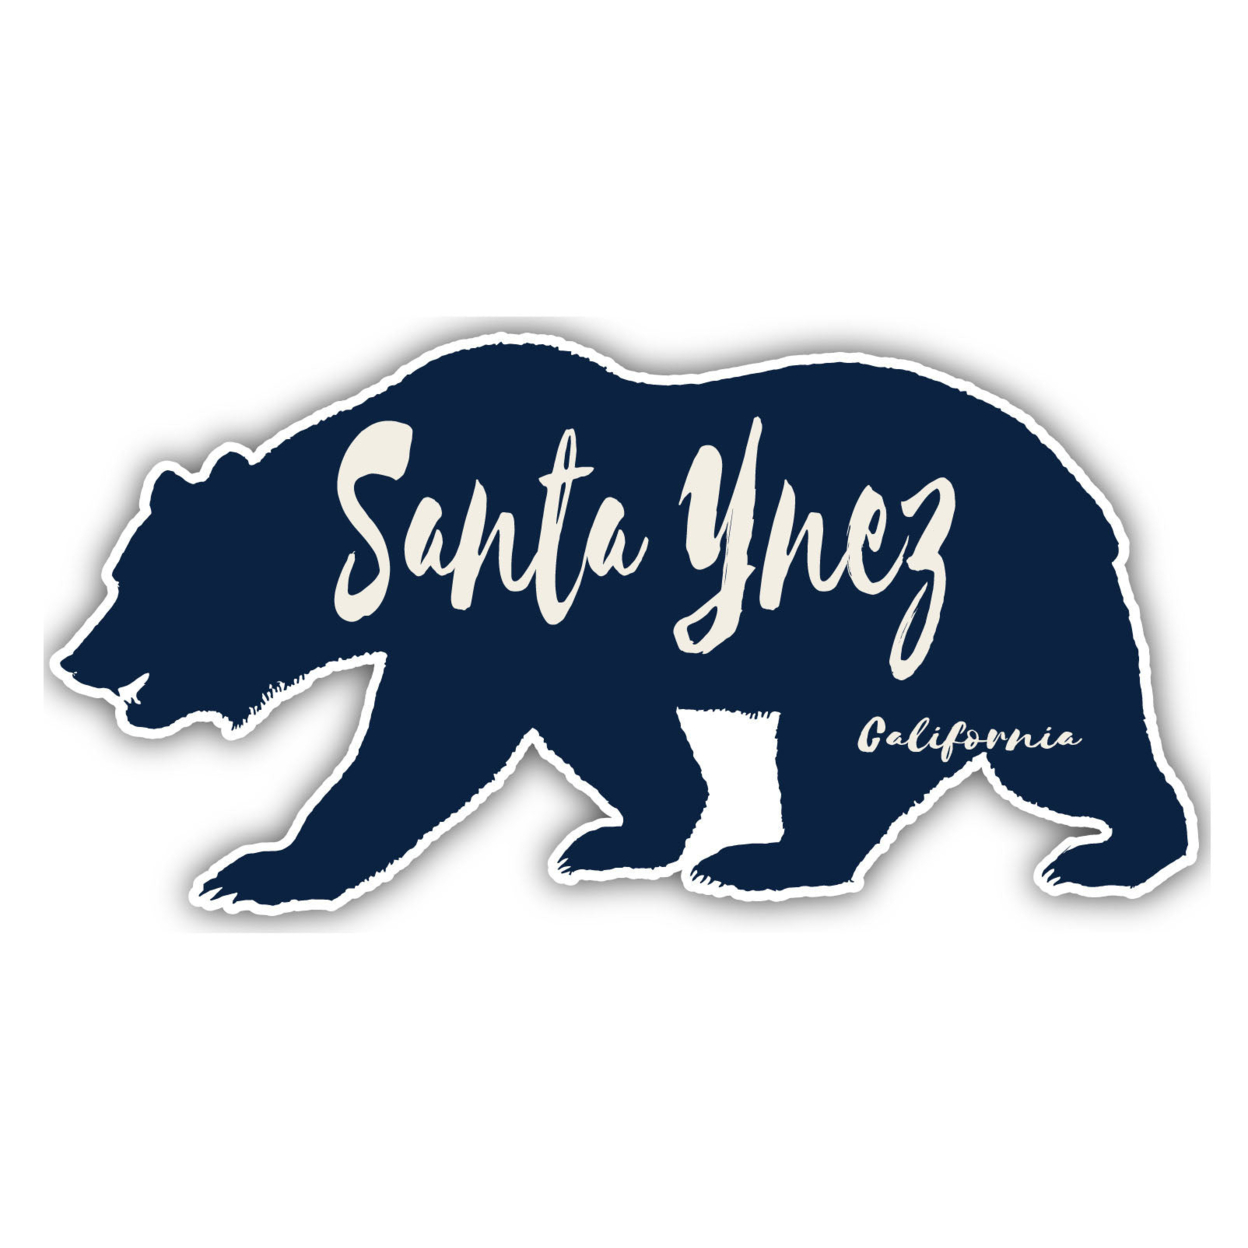 Santa Ynez California Souvenir Decorative Stickers (Choose Theme And Size) - Single Unit, 2-Inch, Tent